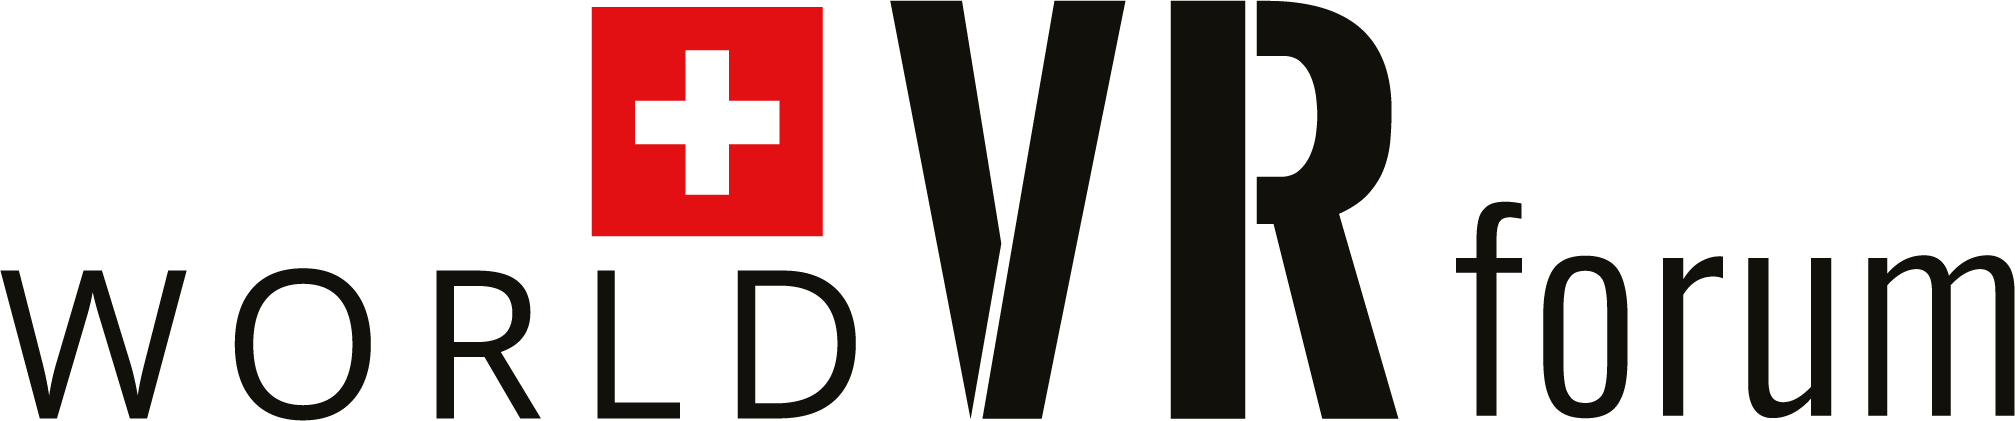 session 188 organizer(s) logo